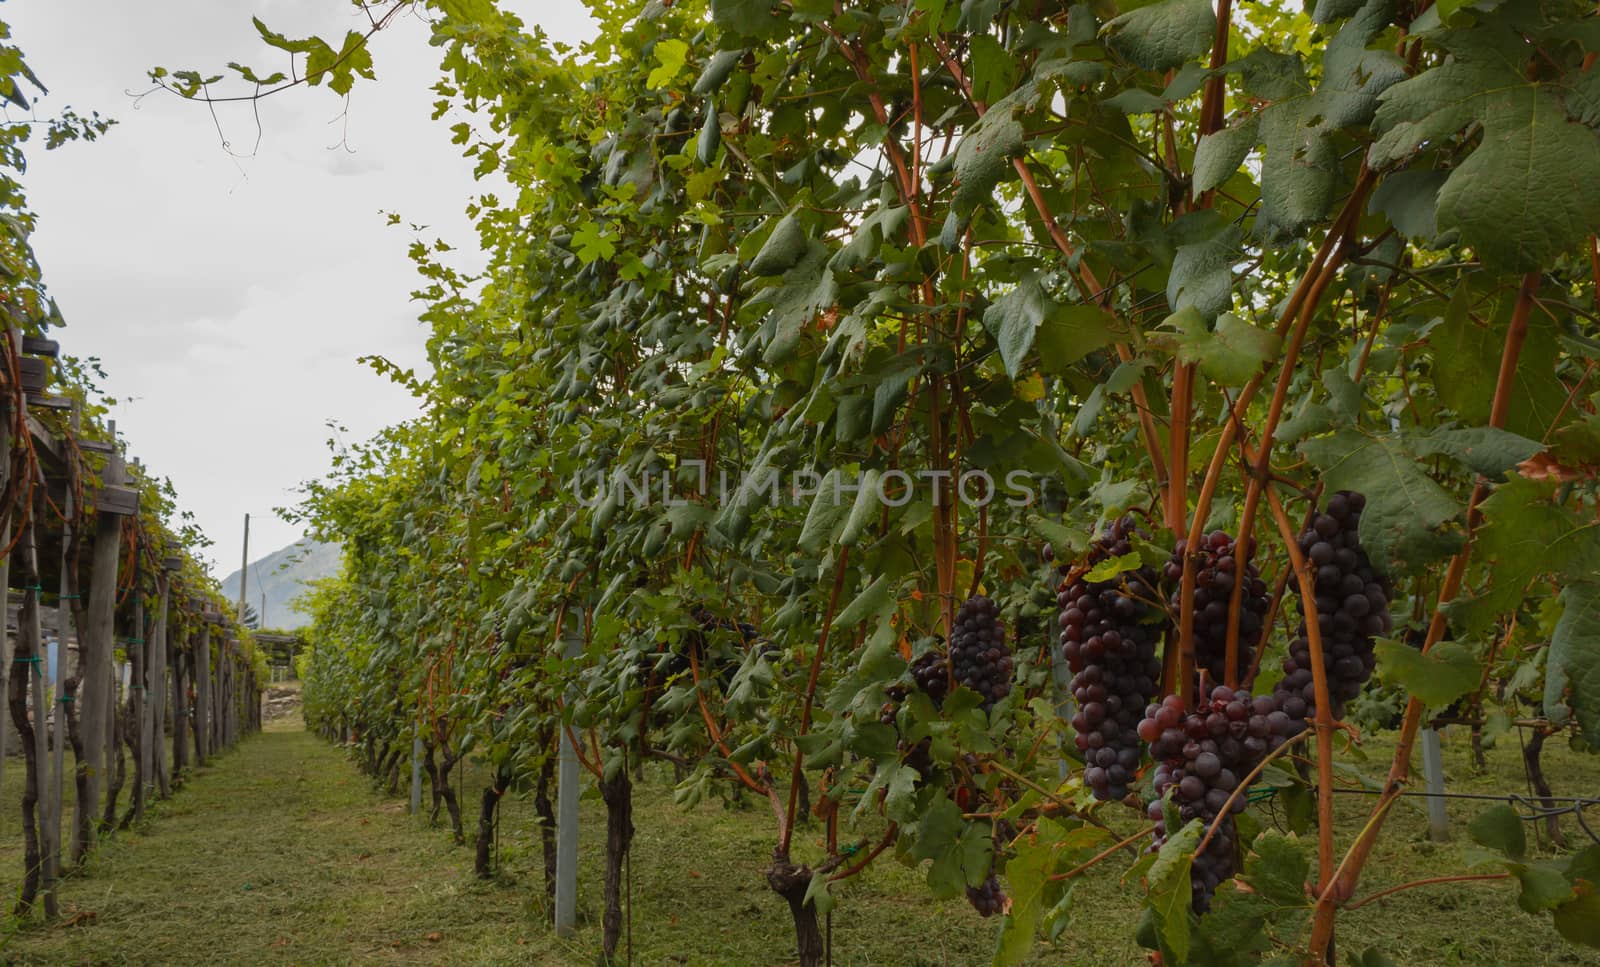 close up of a vineyard by grancanaria